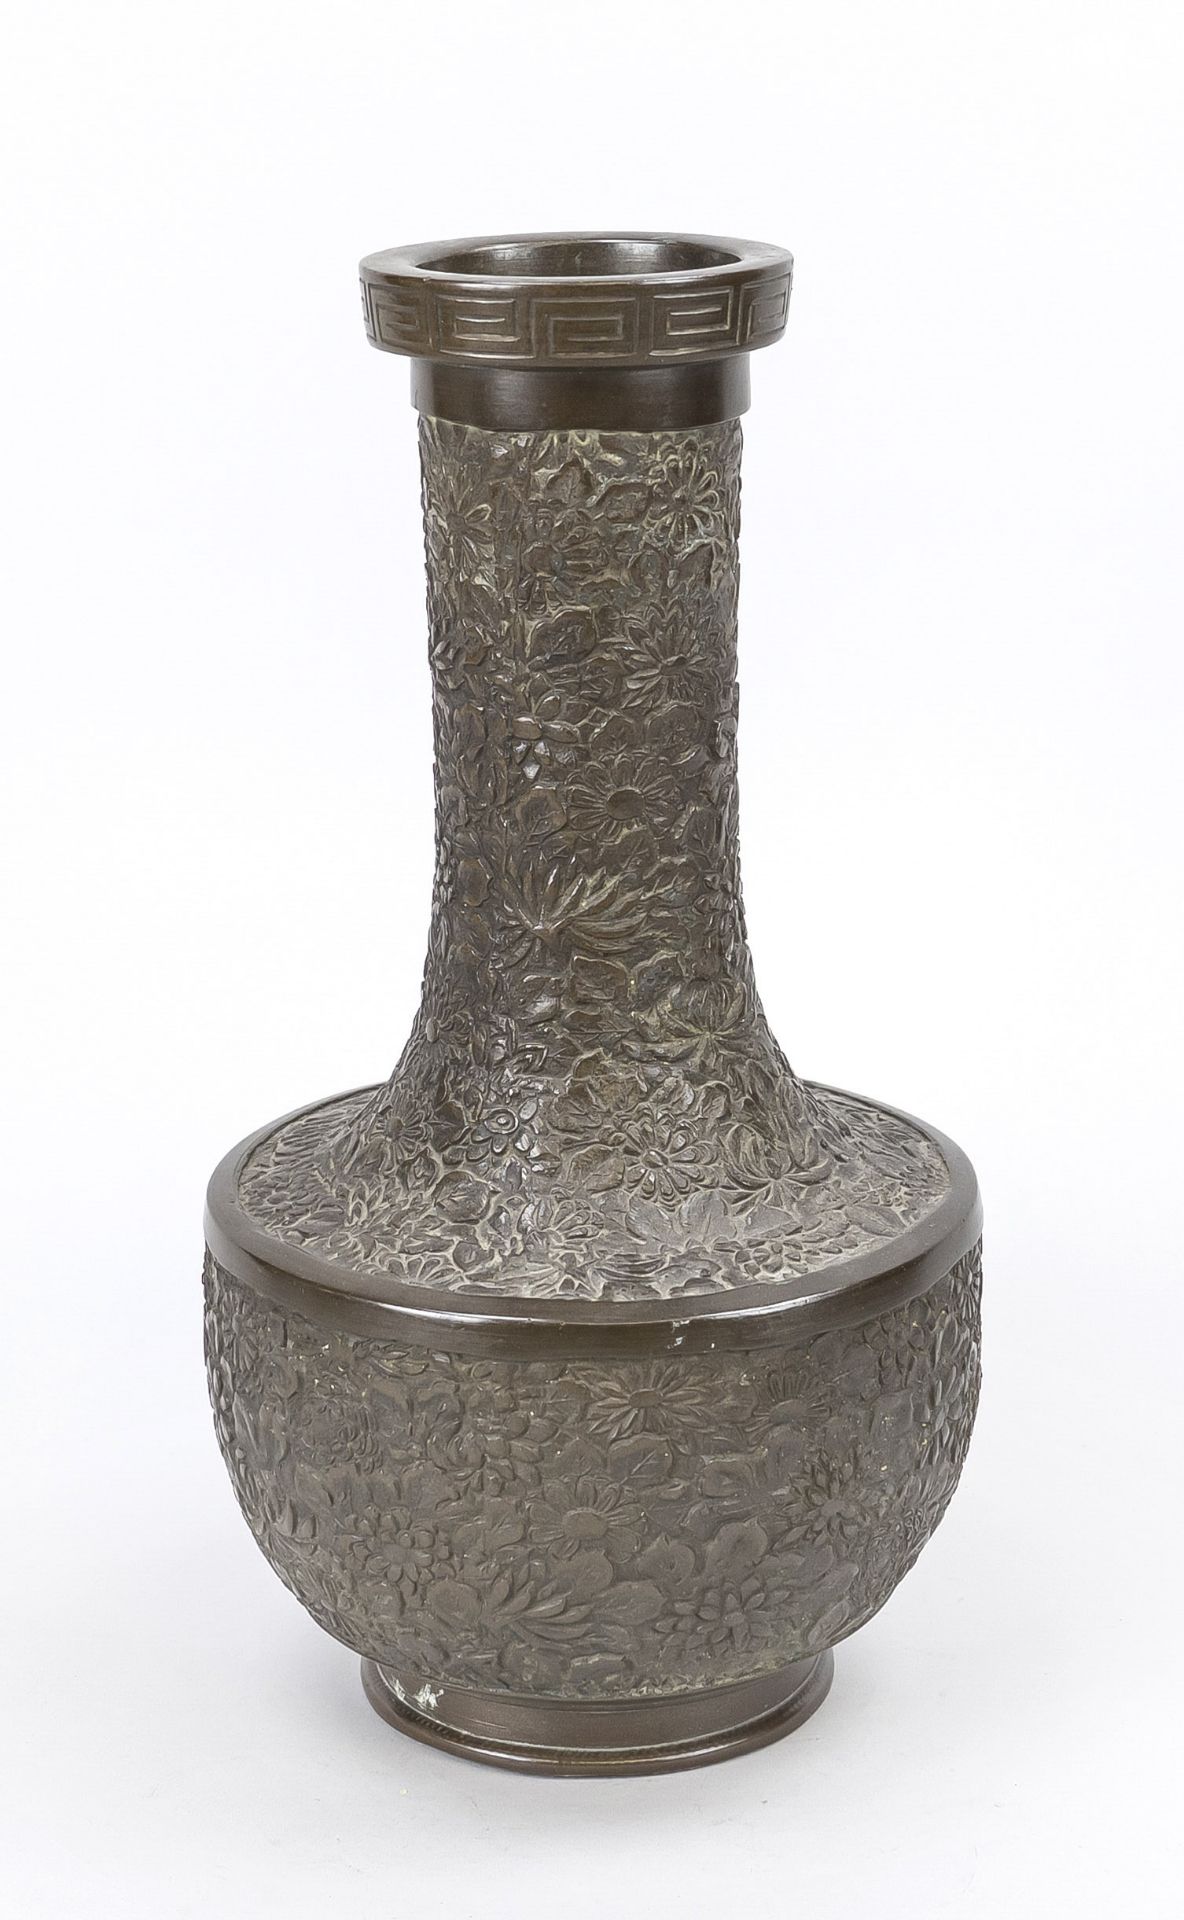 Vase with millefiori decoration, Japan c. 1900 (Meiji), bronze. Shouldered form with long, wide